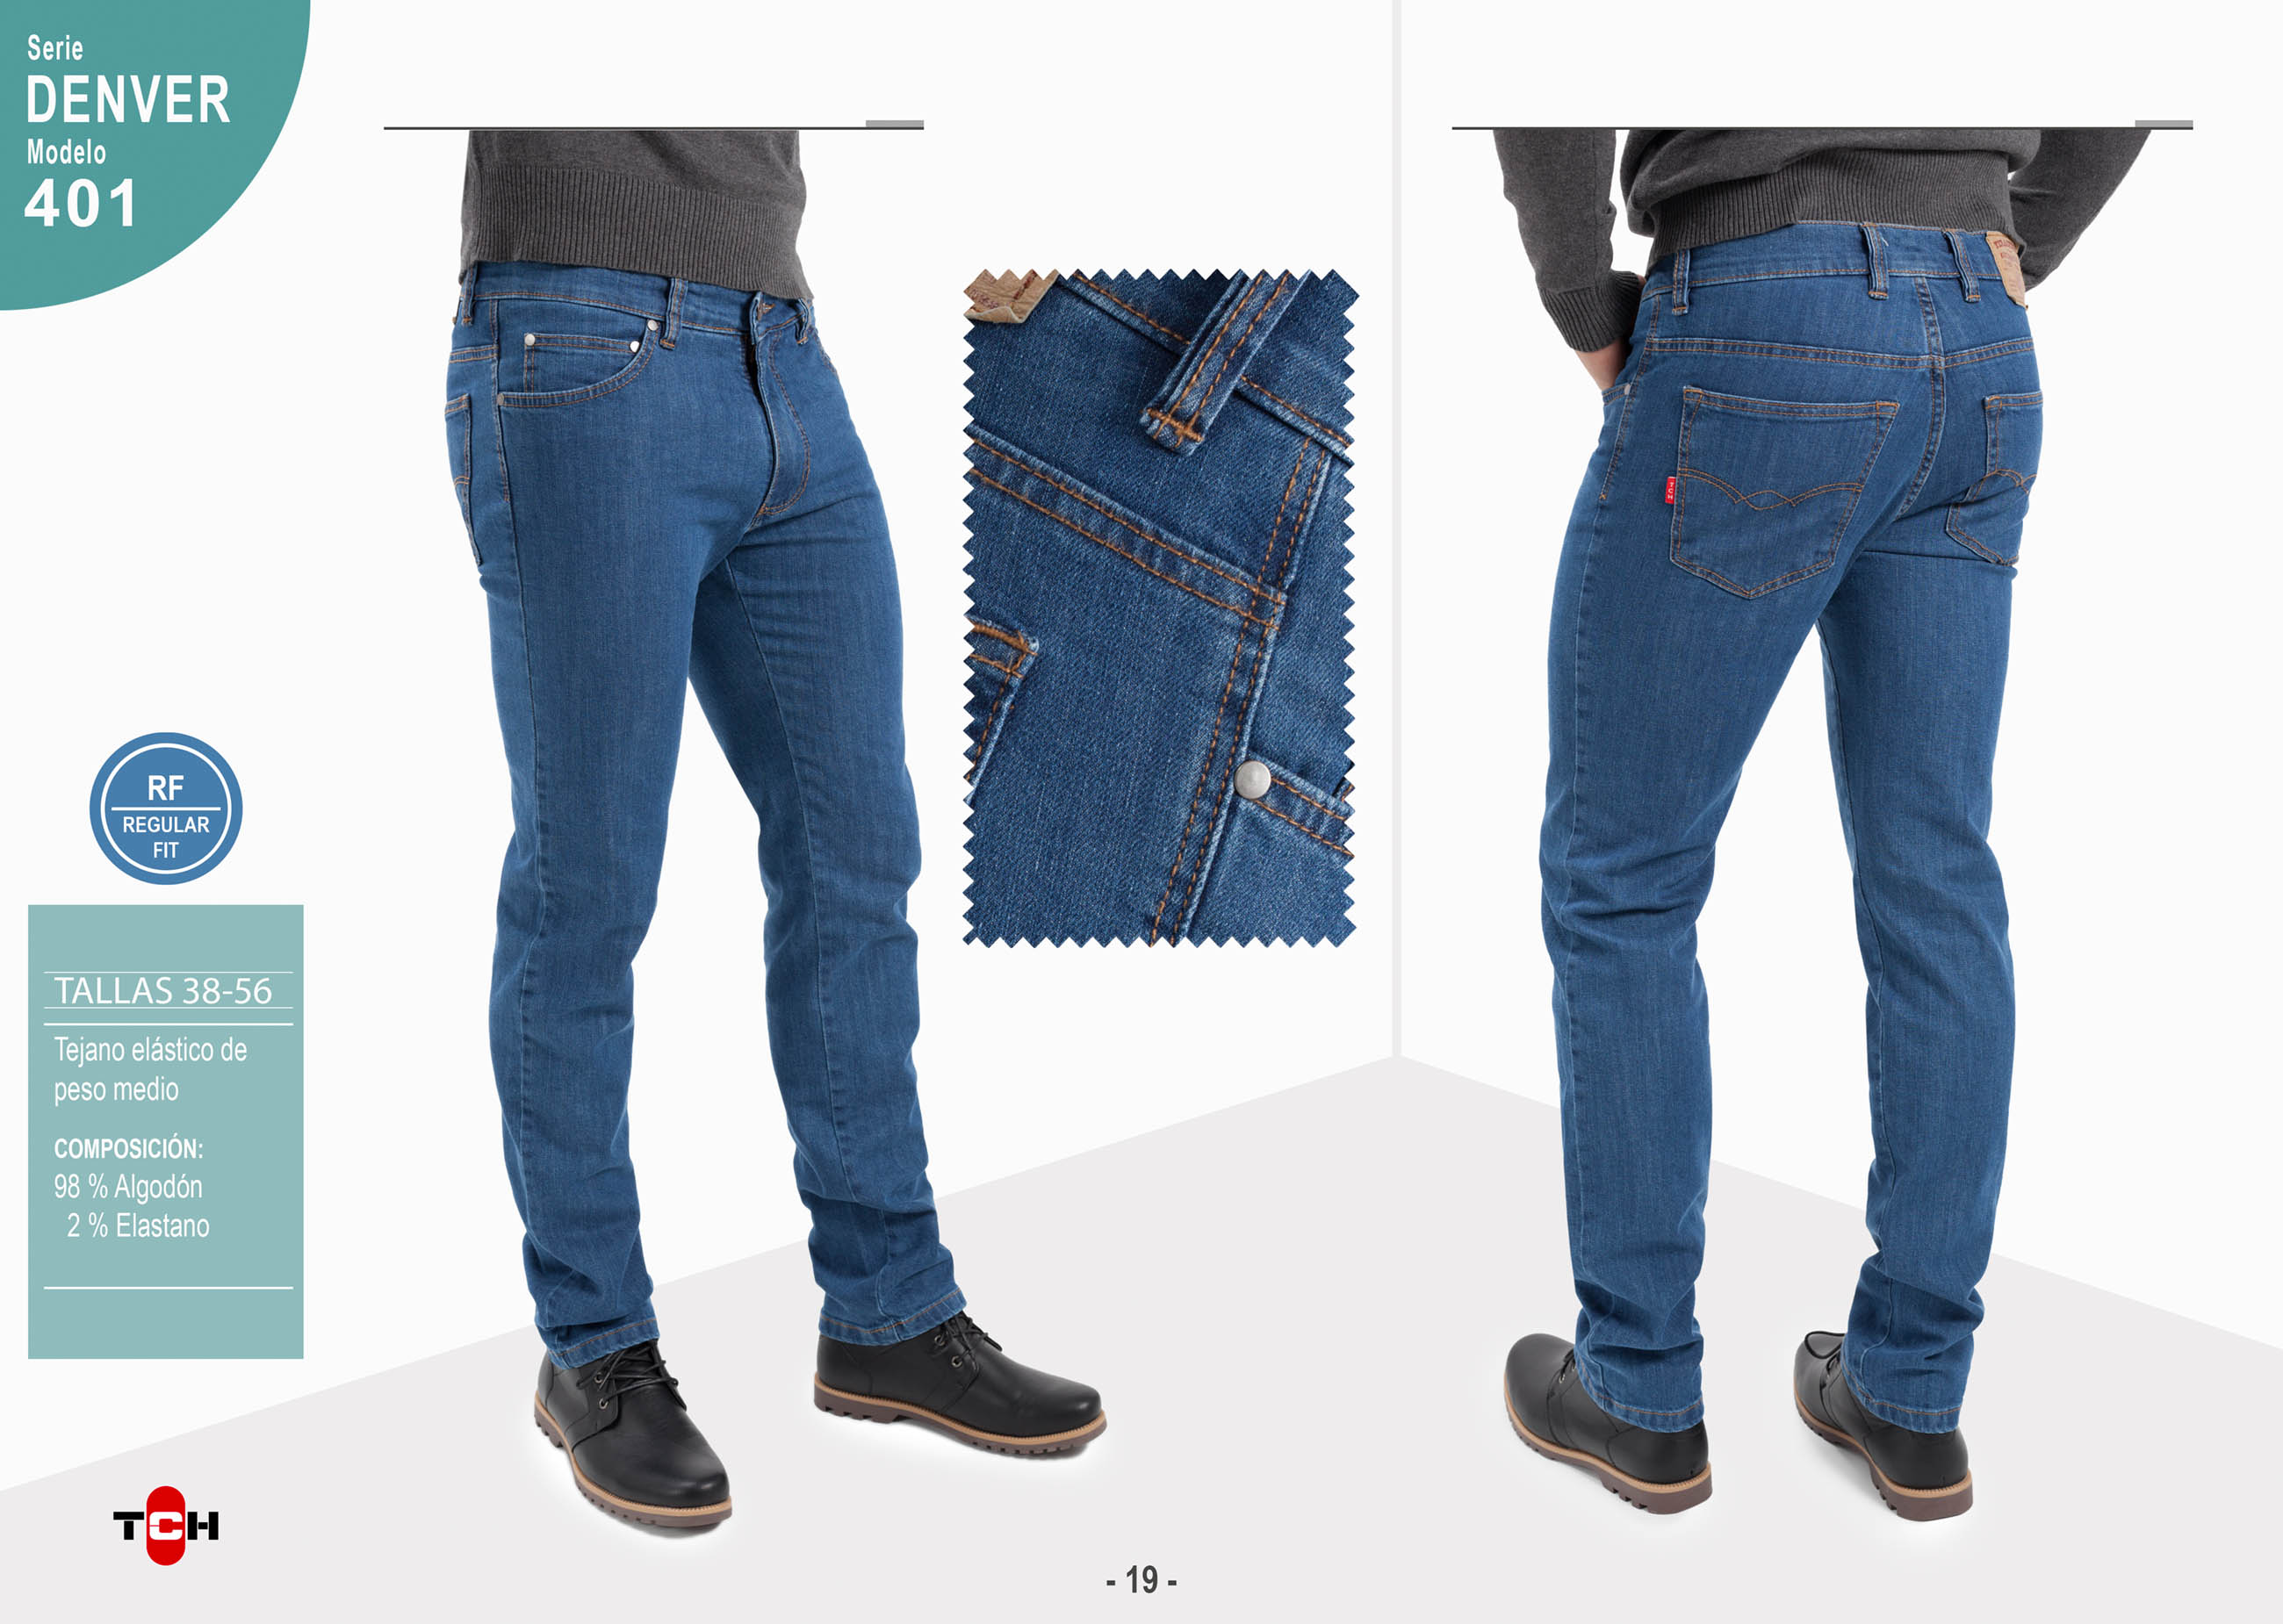 Pantalón TCH Jeans 5 bolsillos en tejido denim vaquero azul con lycra e hilos en contraste.